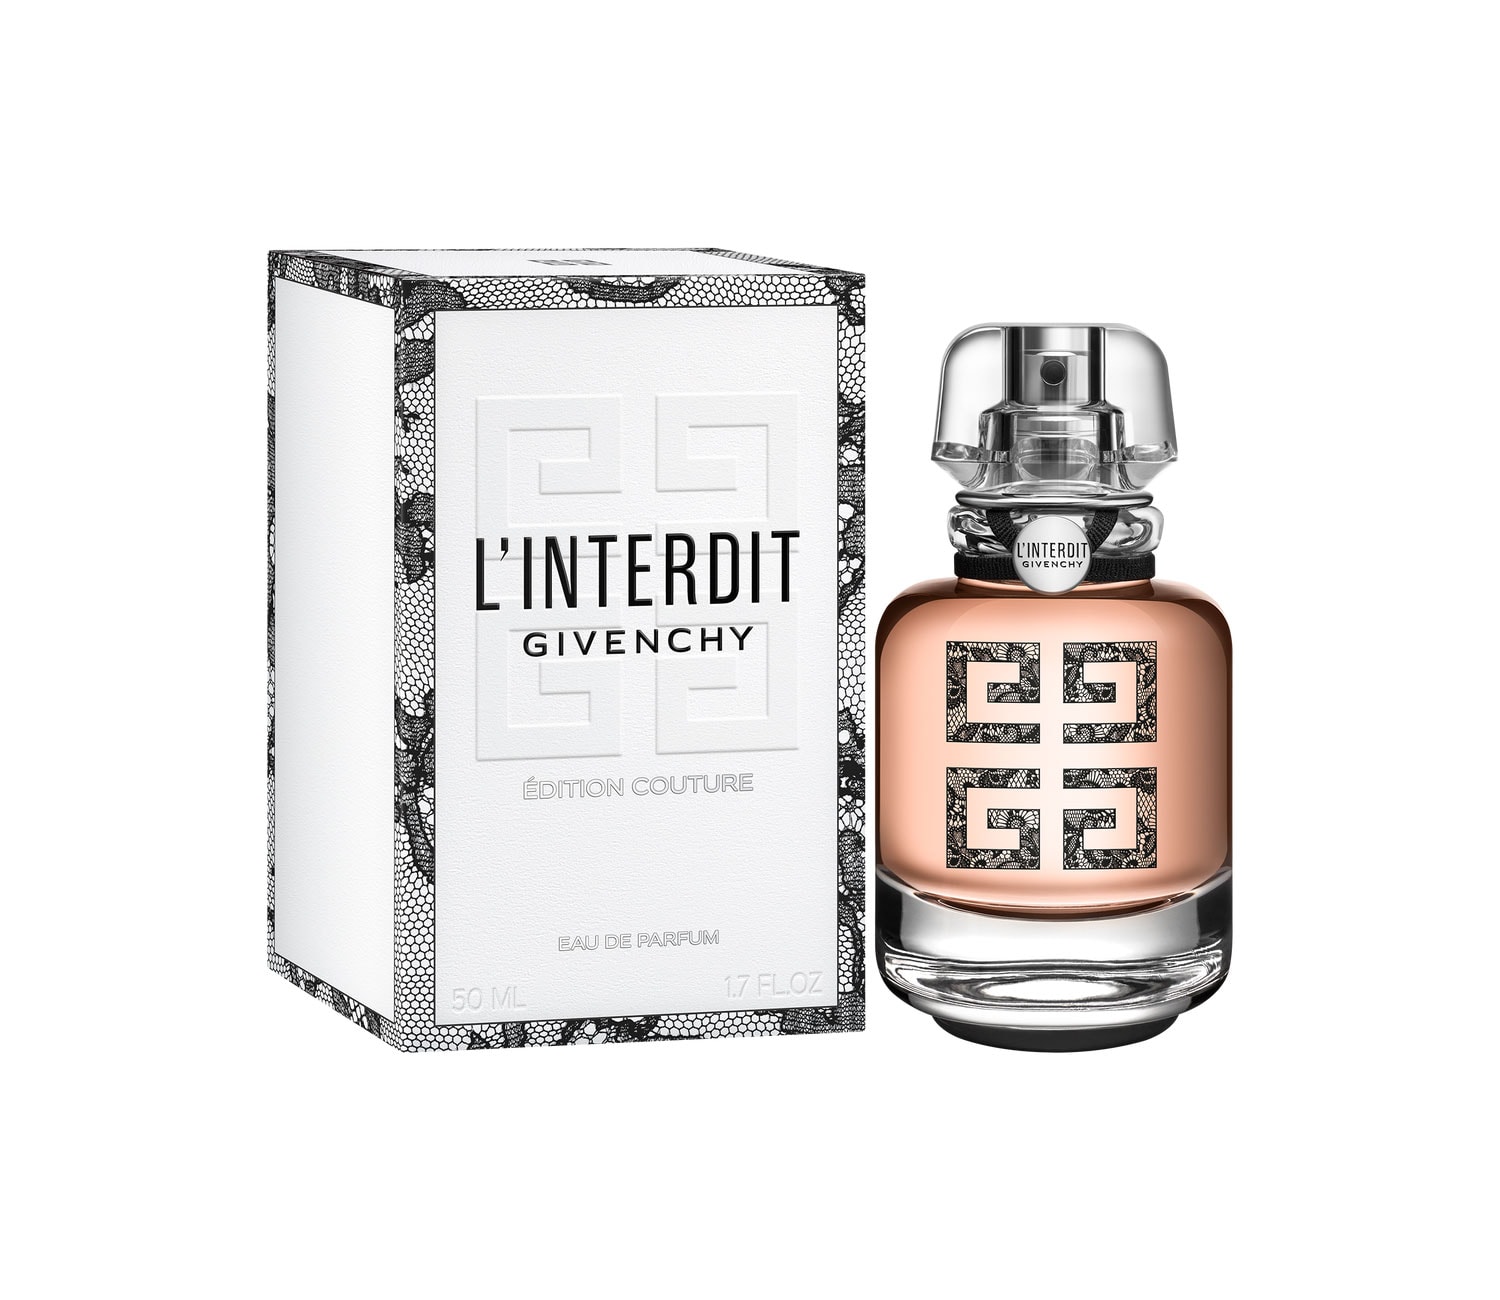 L'Interdit Couture Edition » Givenchy » The Parfumerie » Sri Lanka